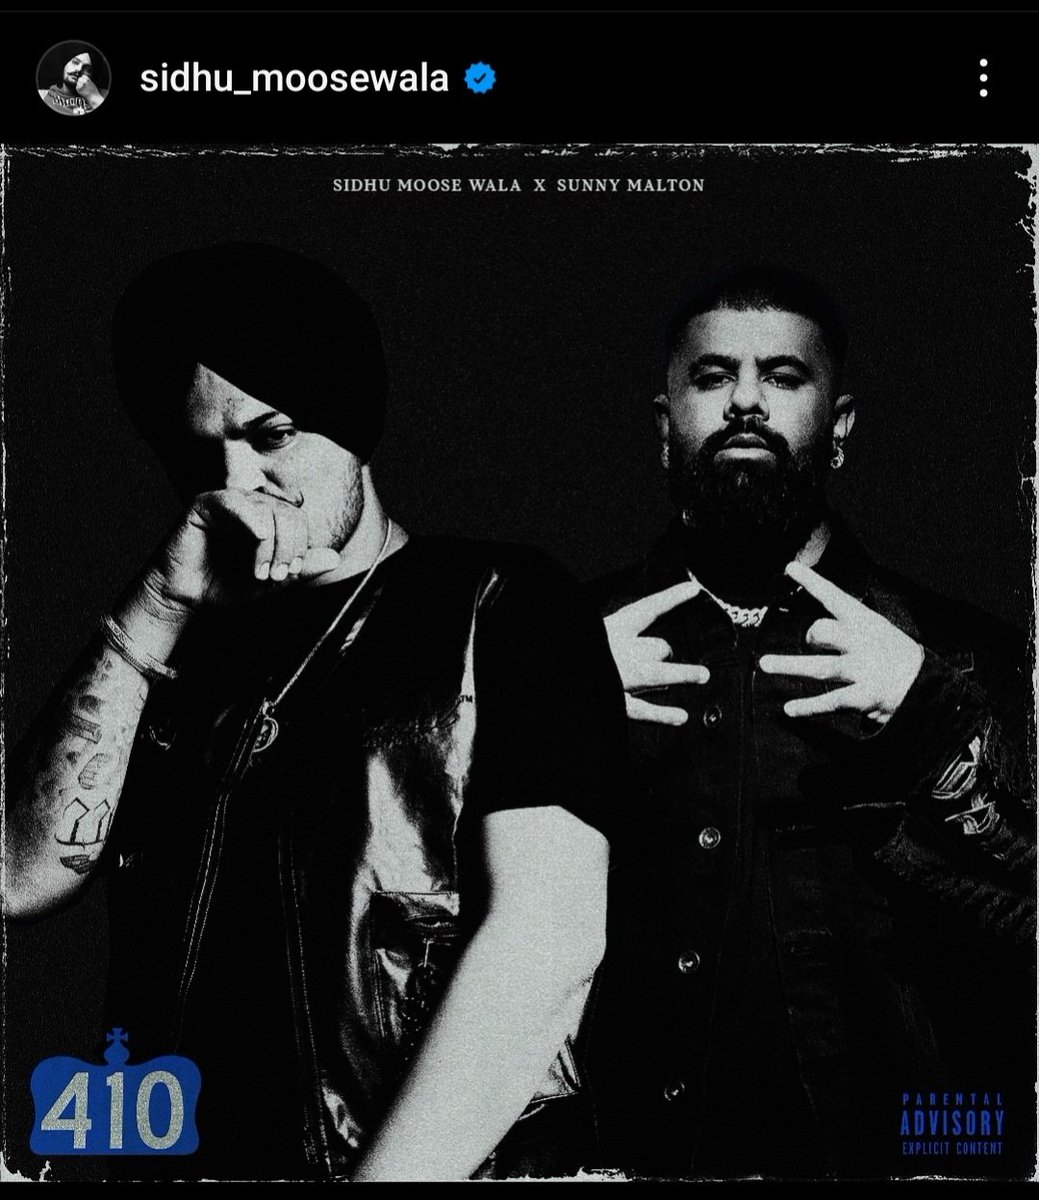 Official poster of New song is out now Track Name '410' Releasing 4.10 Sidhu Moosewala / Sunny malton Team confirms Via Sidhus ig #sidhuMoosewala #JusticeForSidhuMoosewala